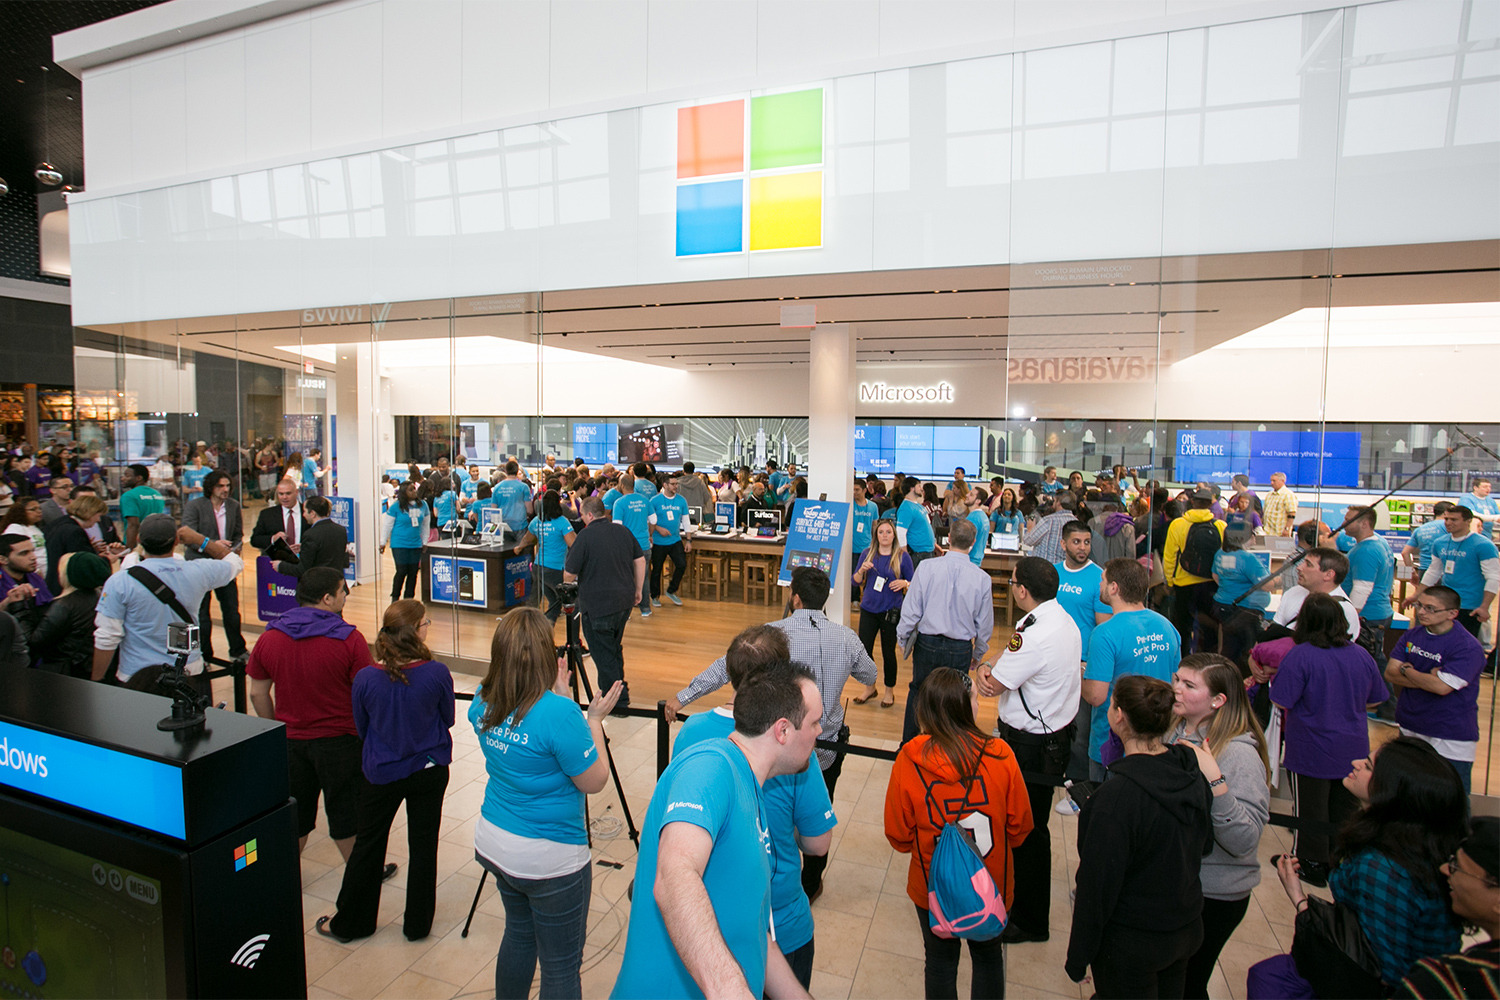 Did Microsoft kill the wrong store?